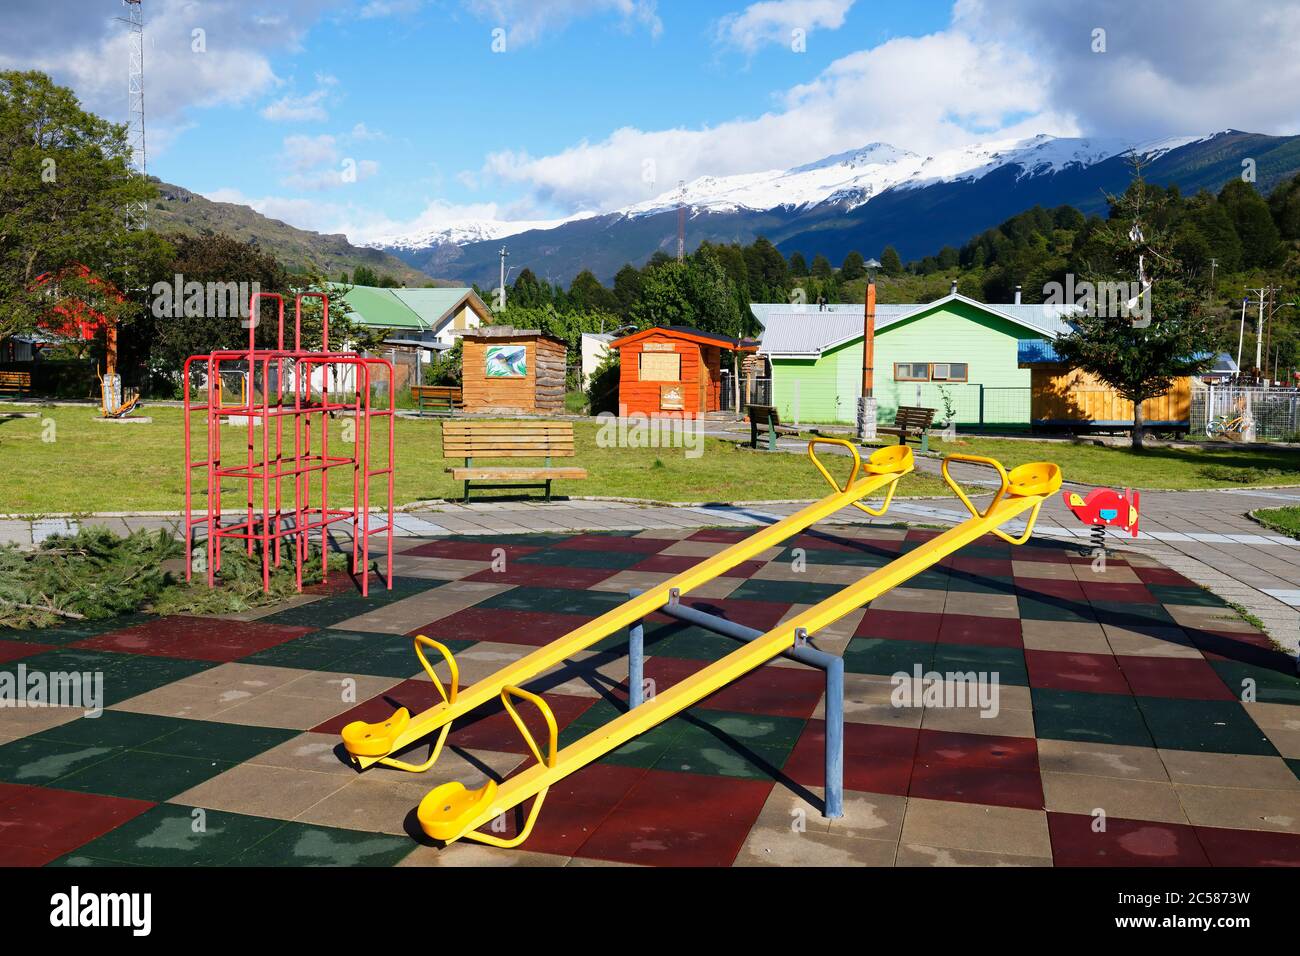 Puerto Río Tranquilo, Main Square, Children games, Carretera Austral, Aysen Region, Patagonia, Chile Stock Photo